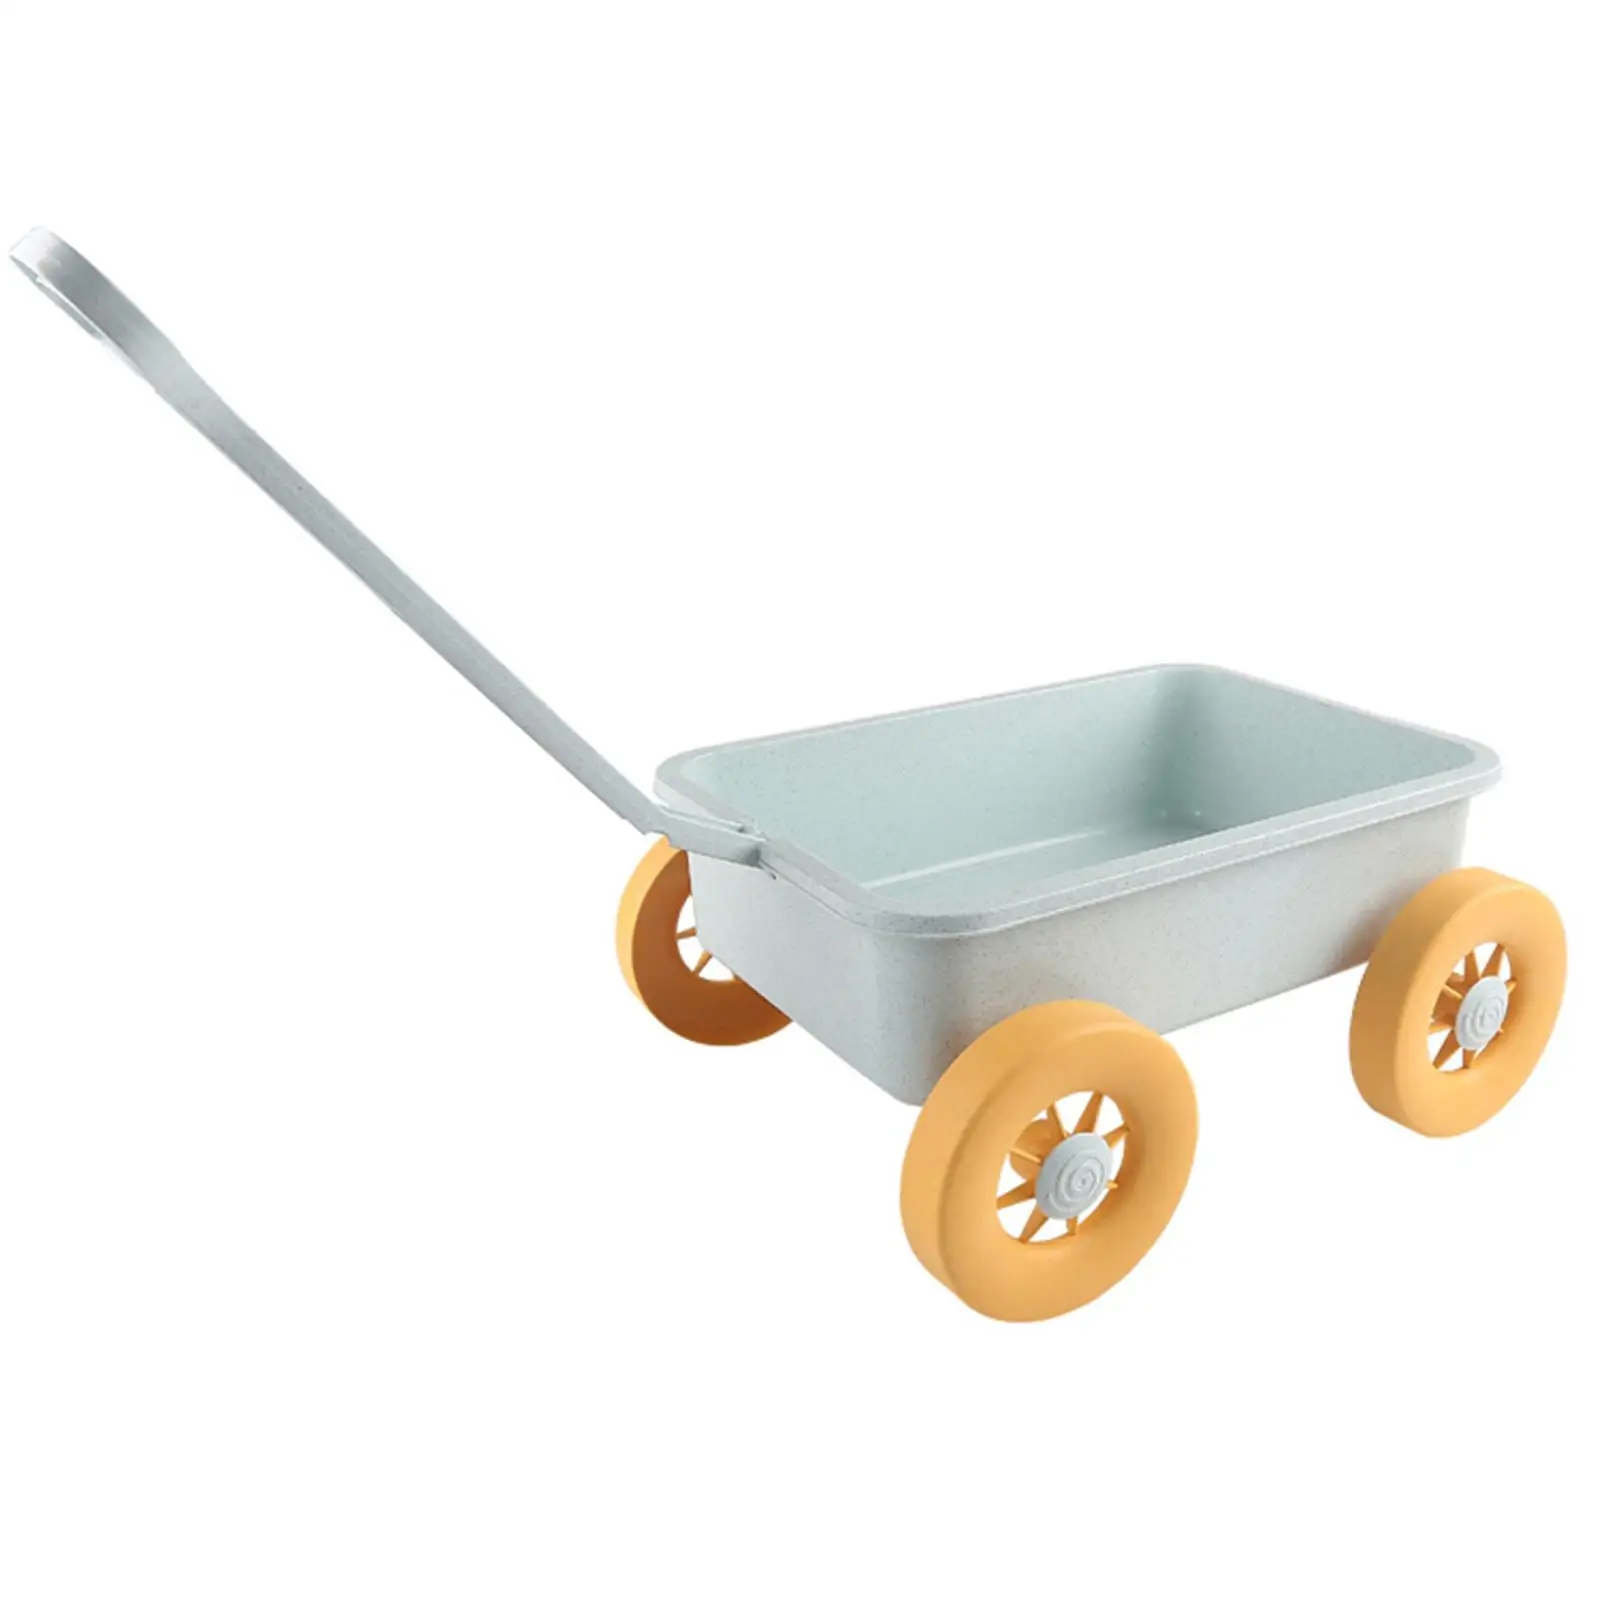 Garden Wagon Tools Toy Vehicle Beach Toys Wagon Small Wagon Toys Wheelbarrow for Stuffed Animals Holding Small Toys